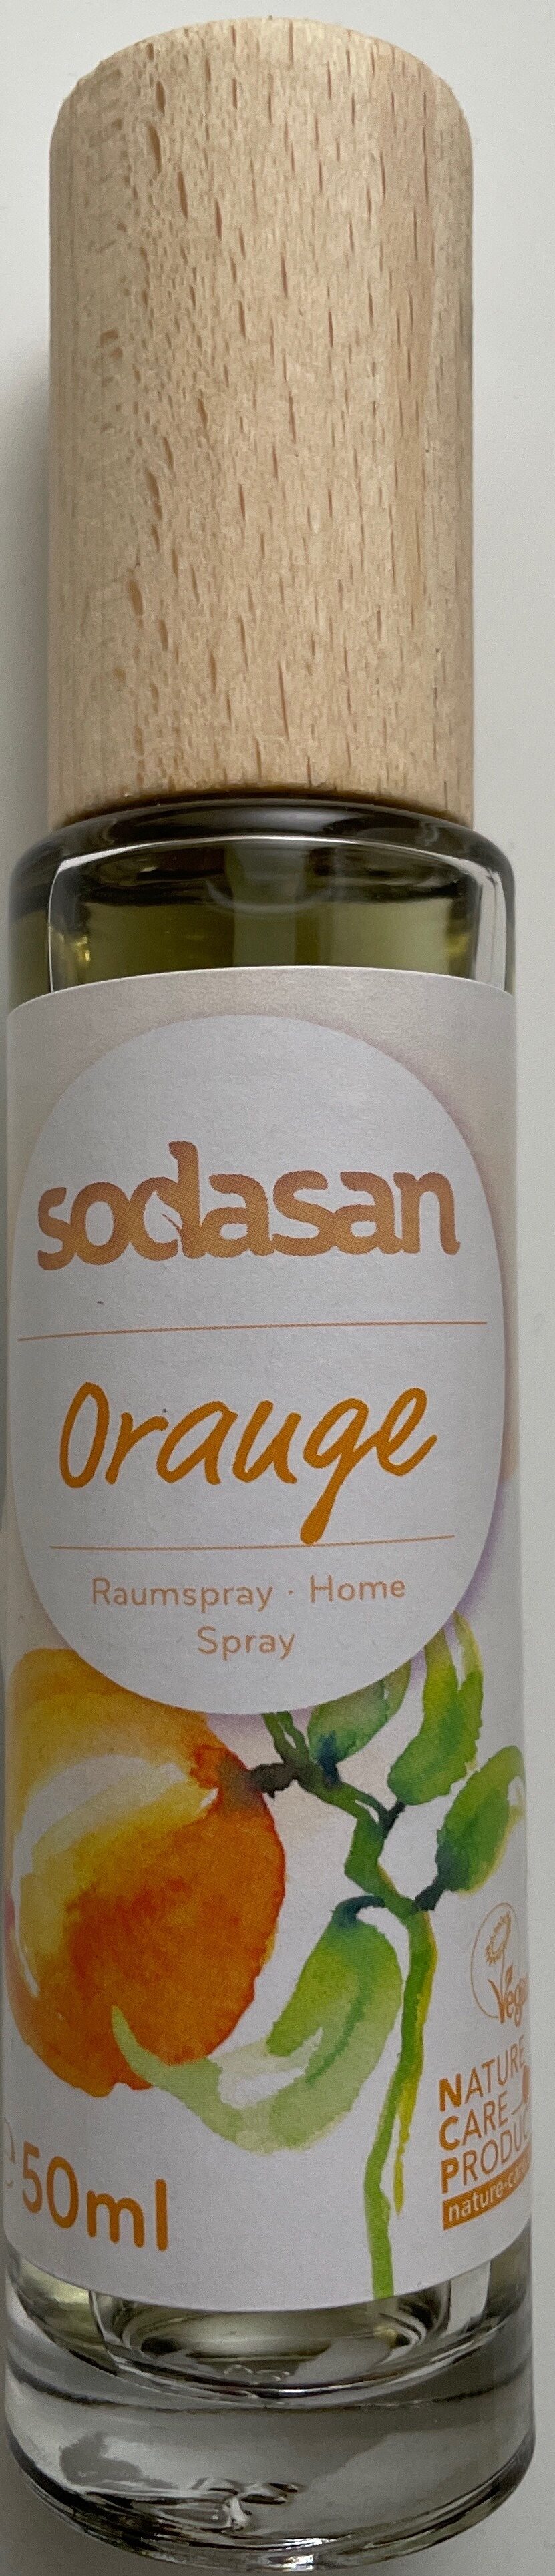 Raumspray Orange - Produkt - de